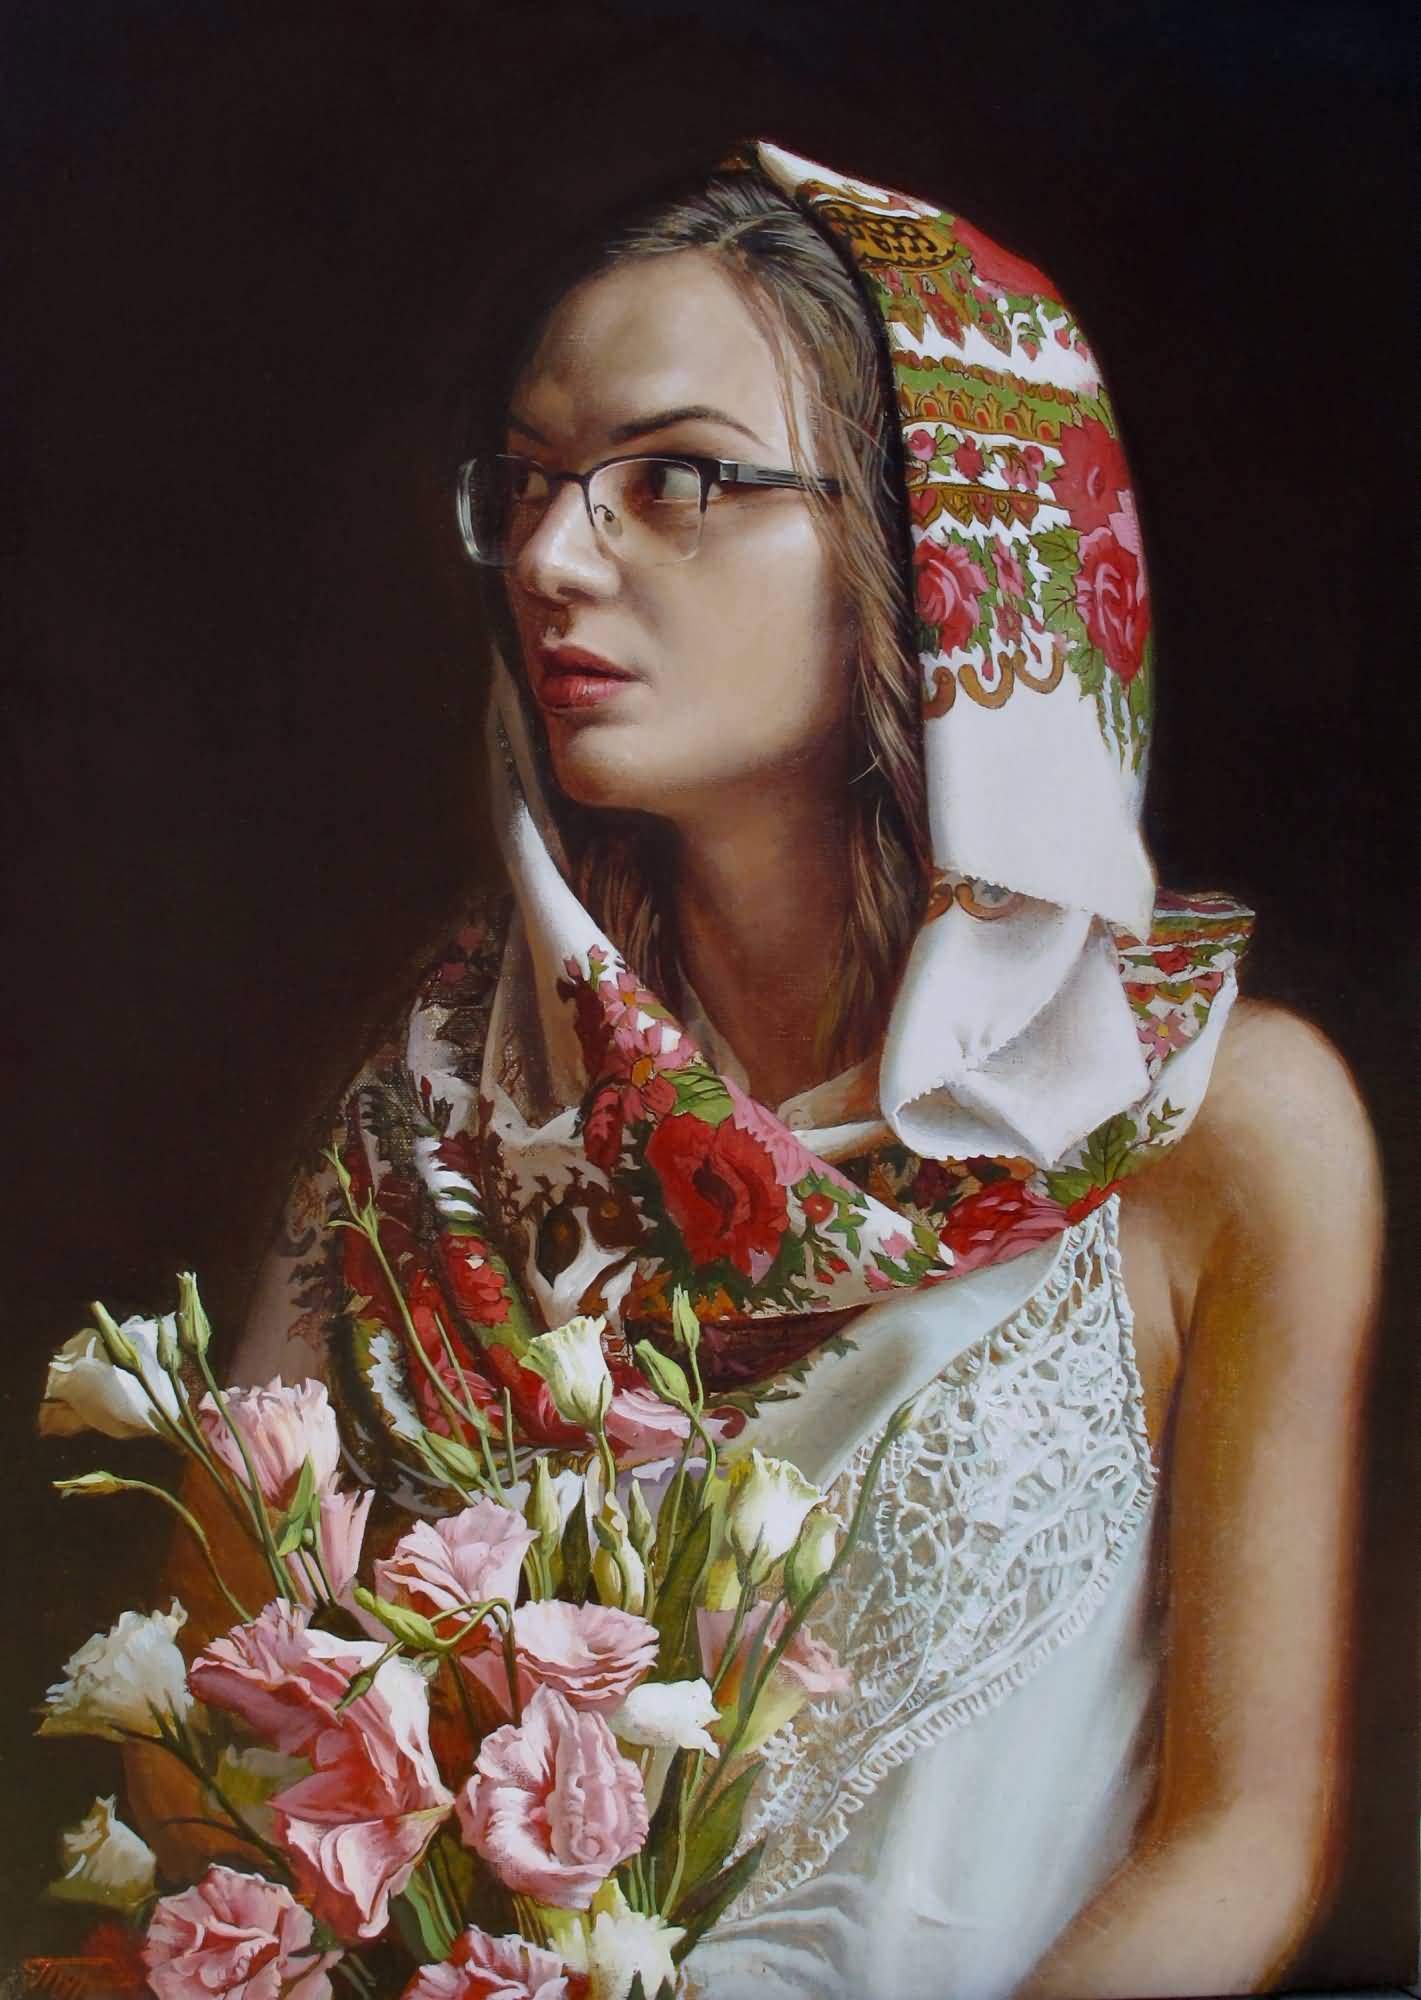 Nastya, oil on canvas, 27.56"h x19.69"w (70x50cm), 2019